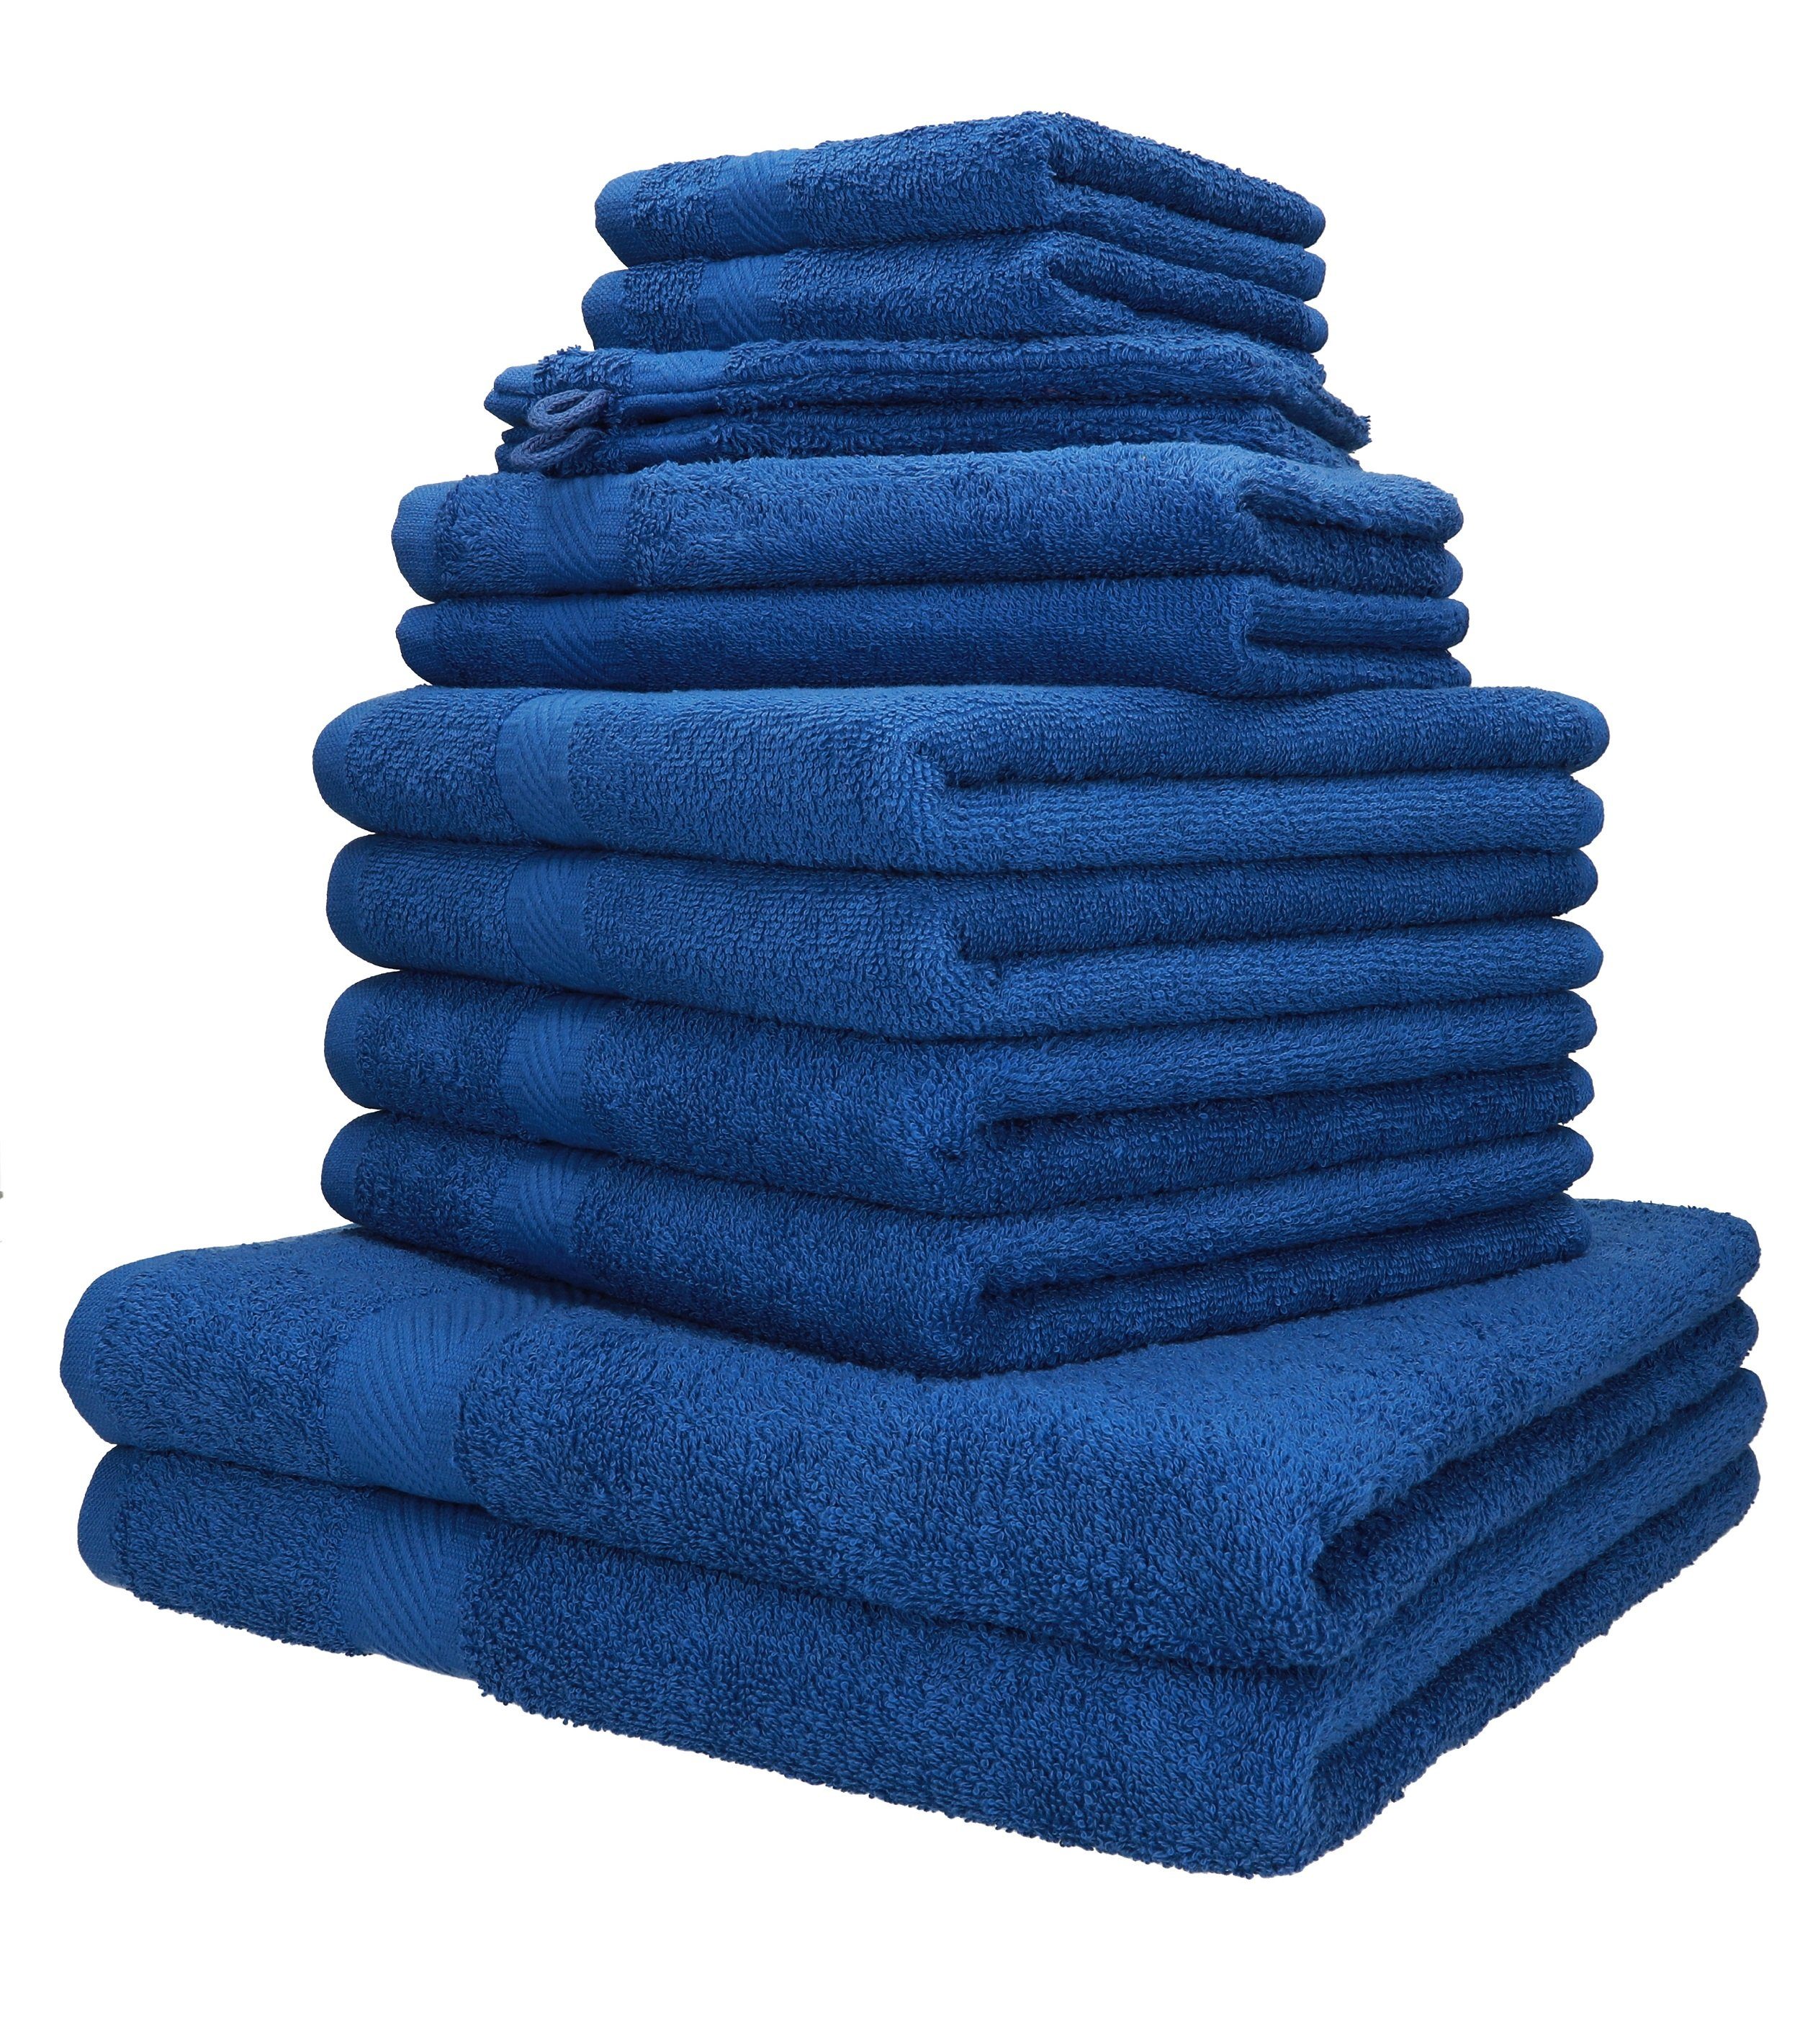 2 2 Handtuch-Set Handtücher Palermo 4 Baumwolle, 2 100% Set (12-tlg) Betz 100% Baumwolle Waschhandschuhe, Liegetücher blau 2 Handtuch Gästetücher Seiftücher 12-TLG.